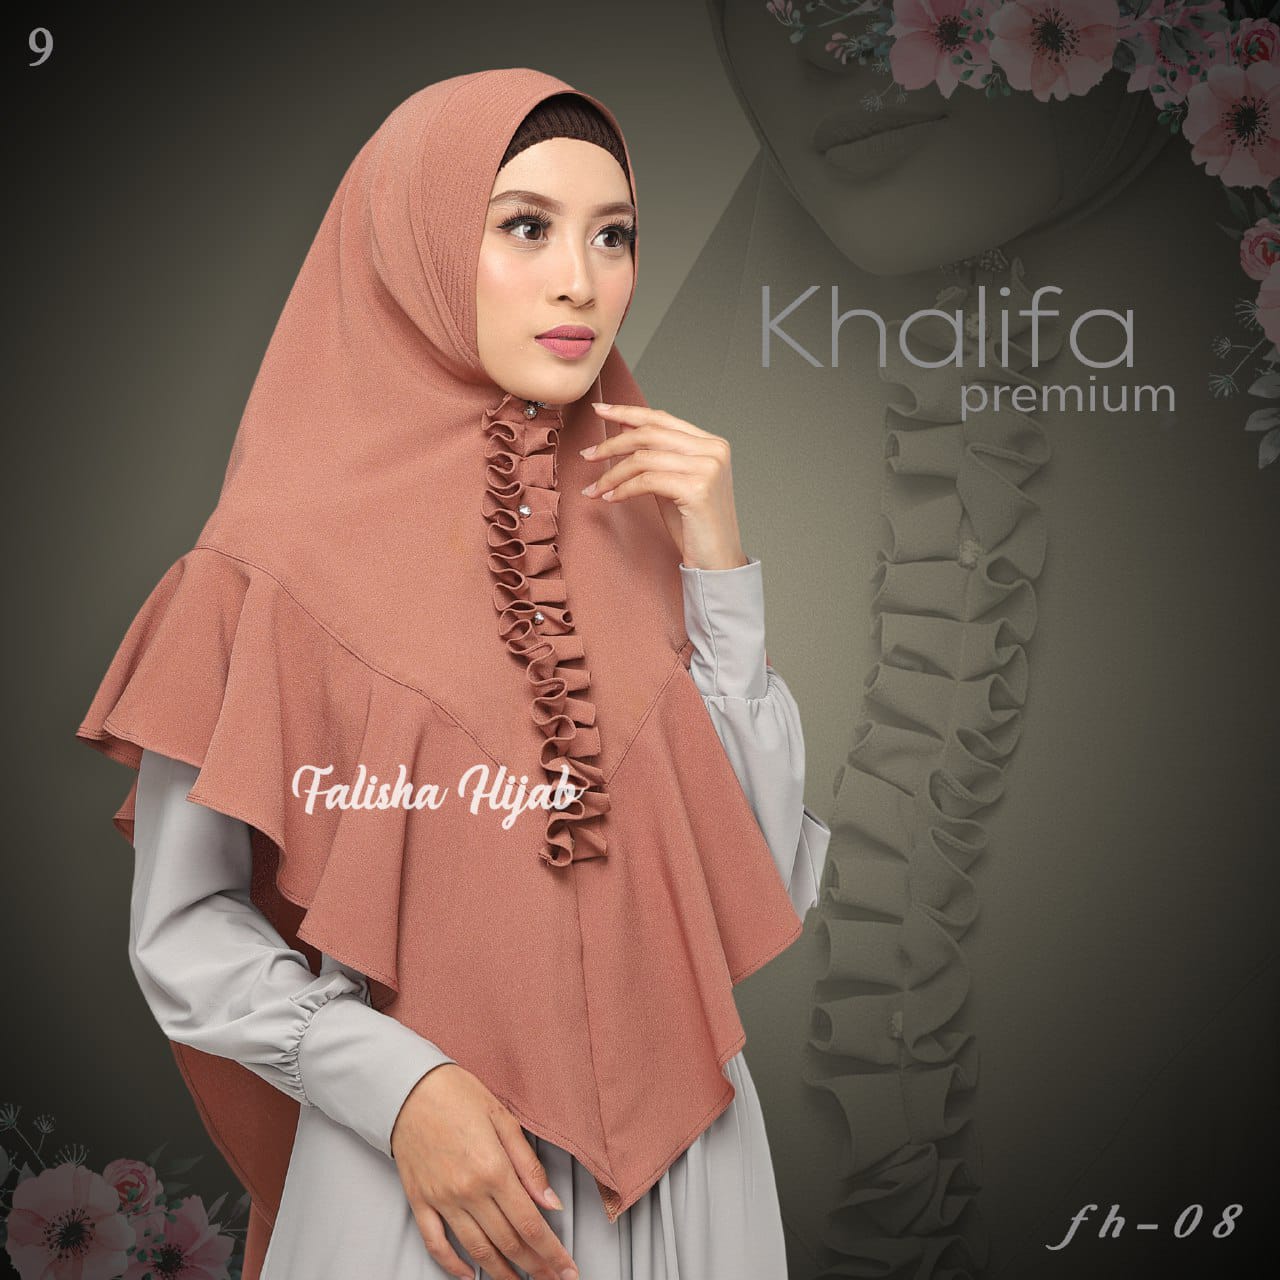 KHALIFA By Falisha Hijab